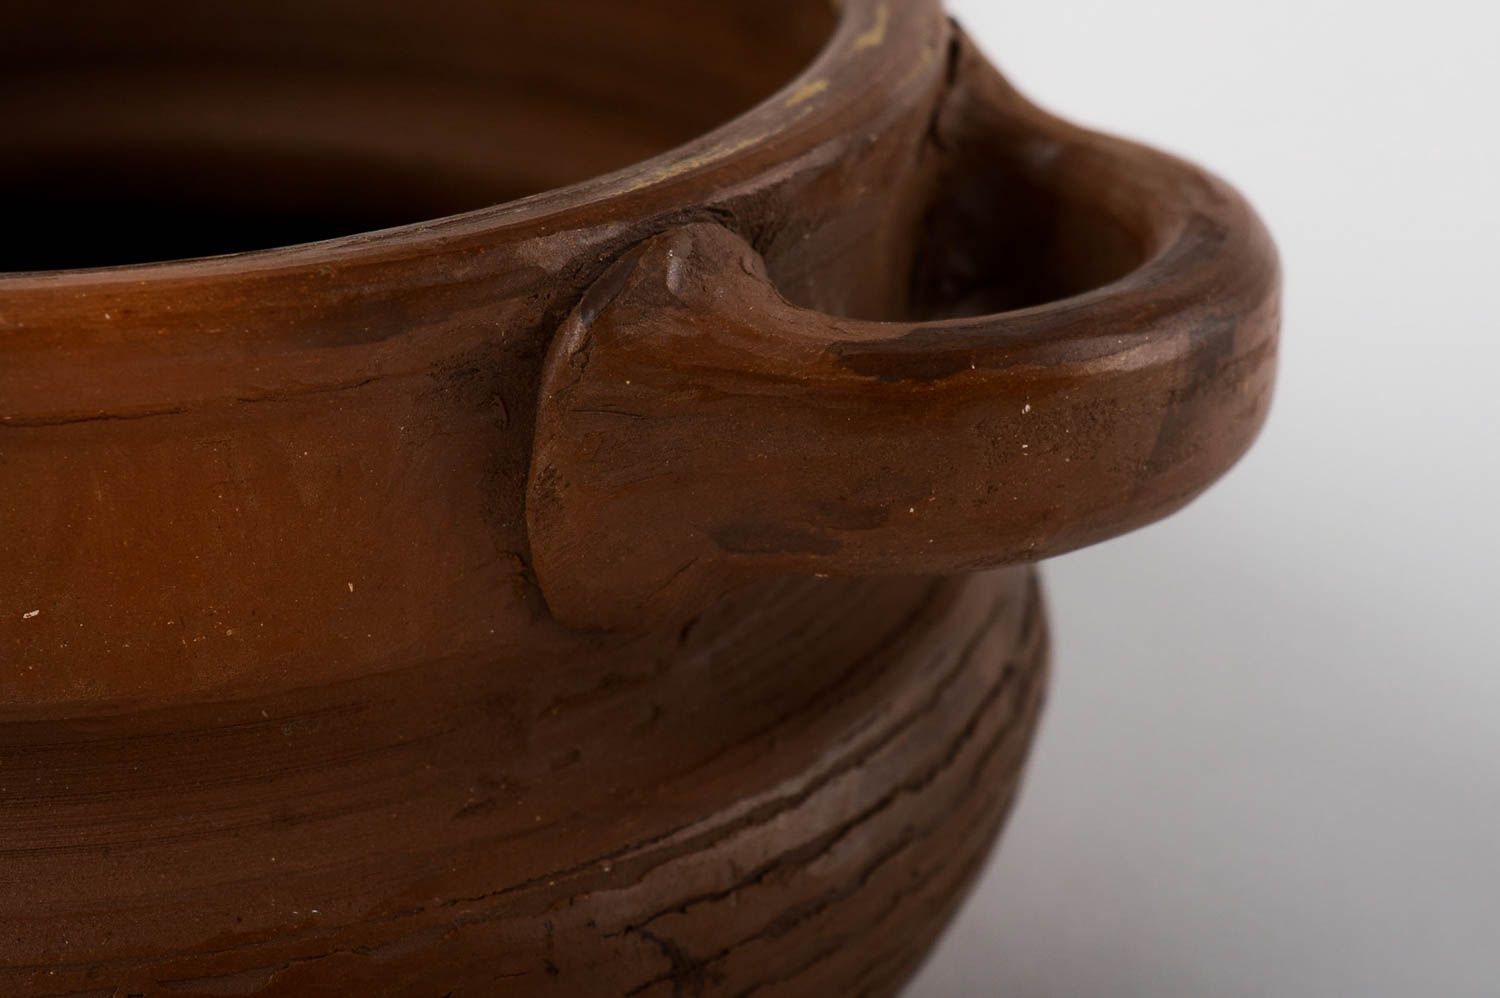 Handmade pottery ceramic tableware handmade cookware ceramic product gift ideas photo 4